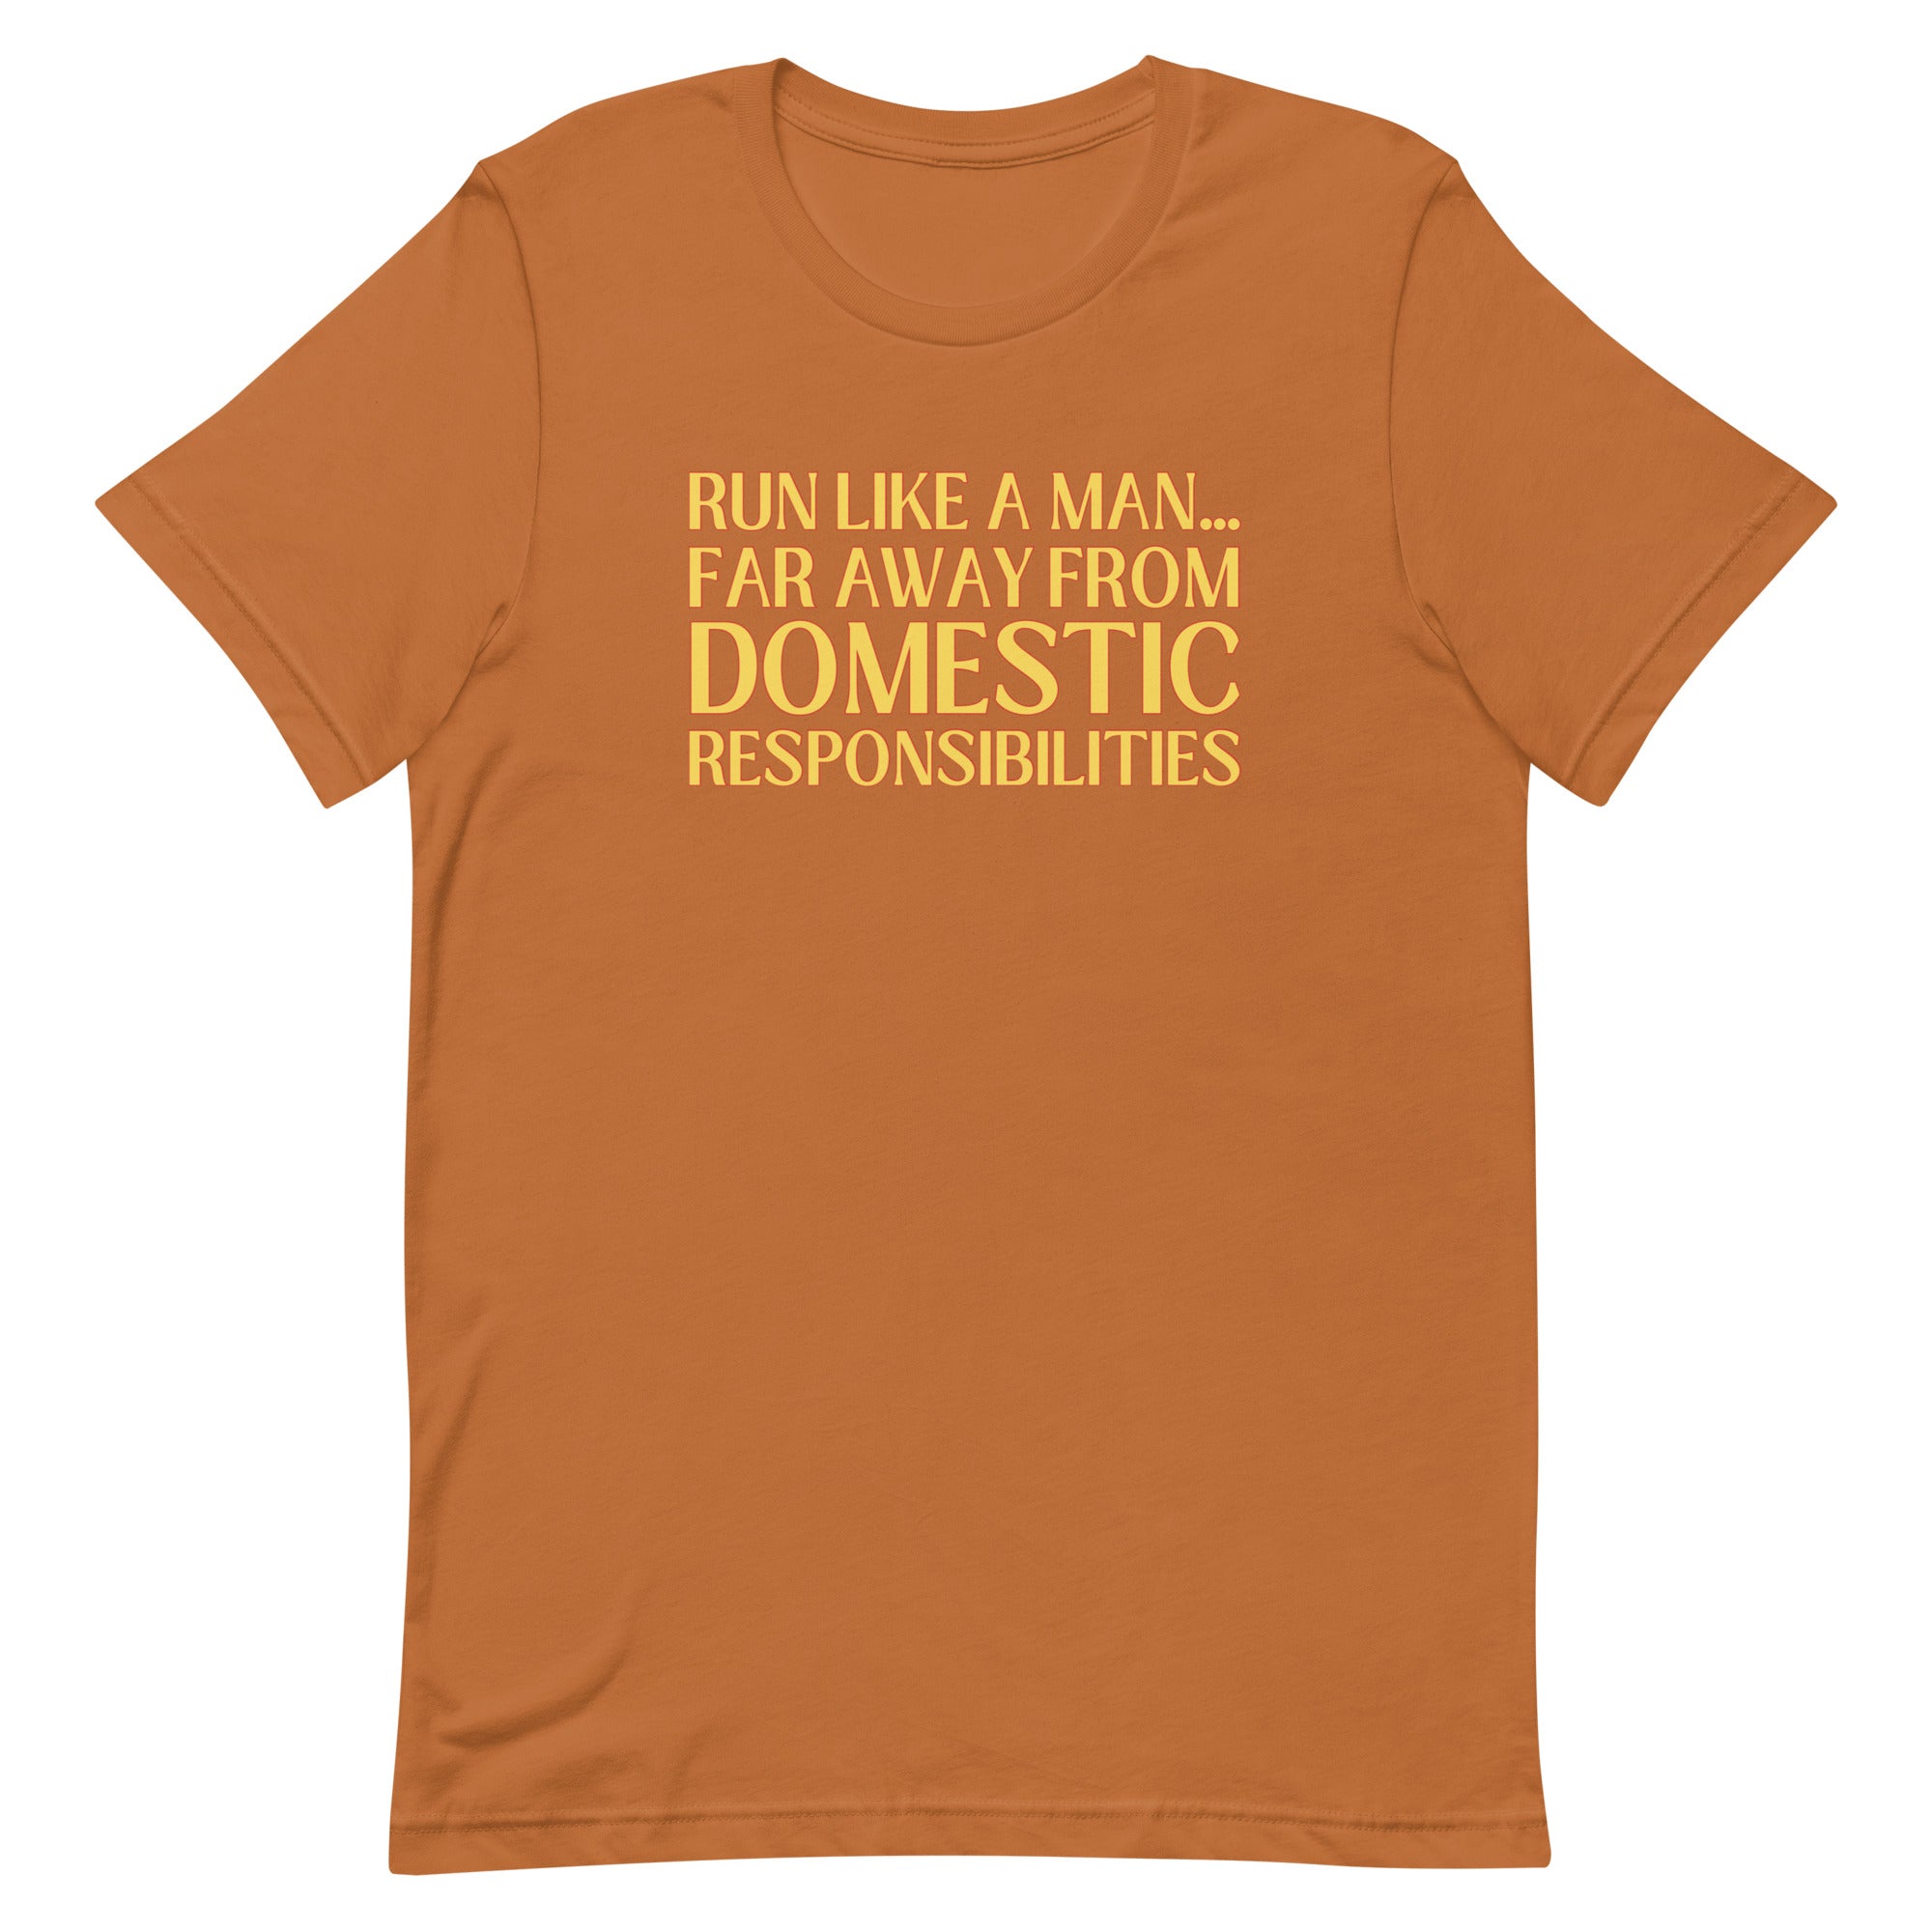 Run Like A Man Unisex Feminist t-shirt - Shop Women’s Rights T-shirts - Feminist Trash Store - Toast